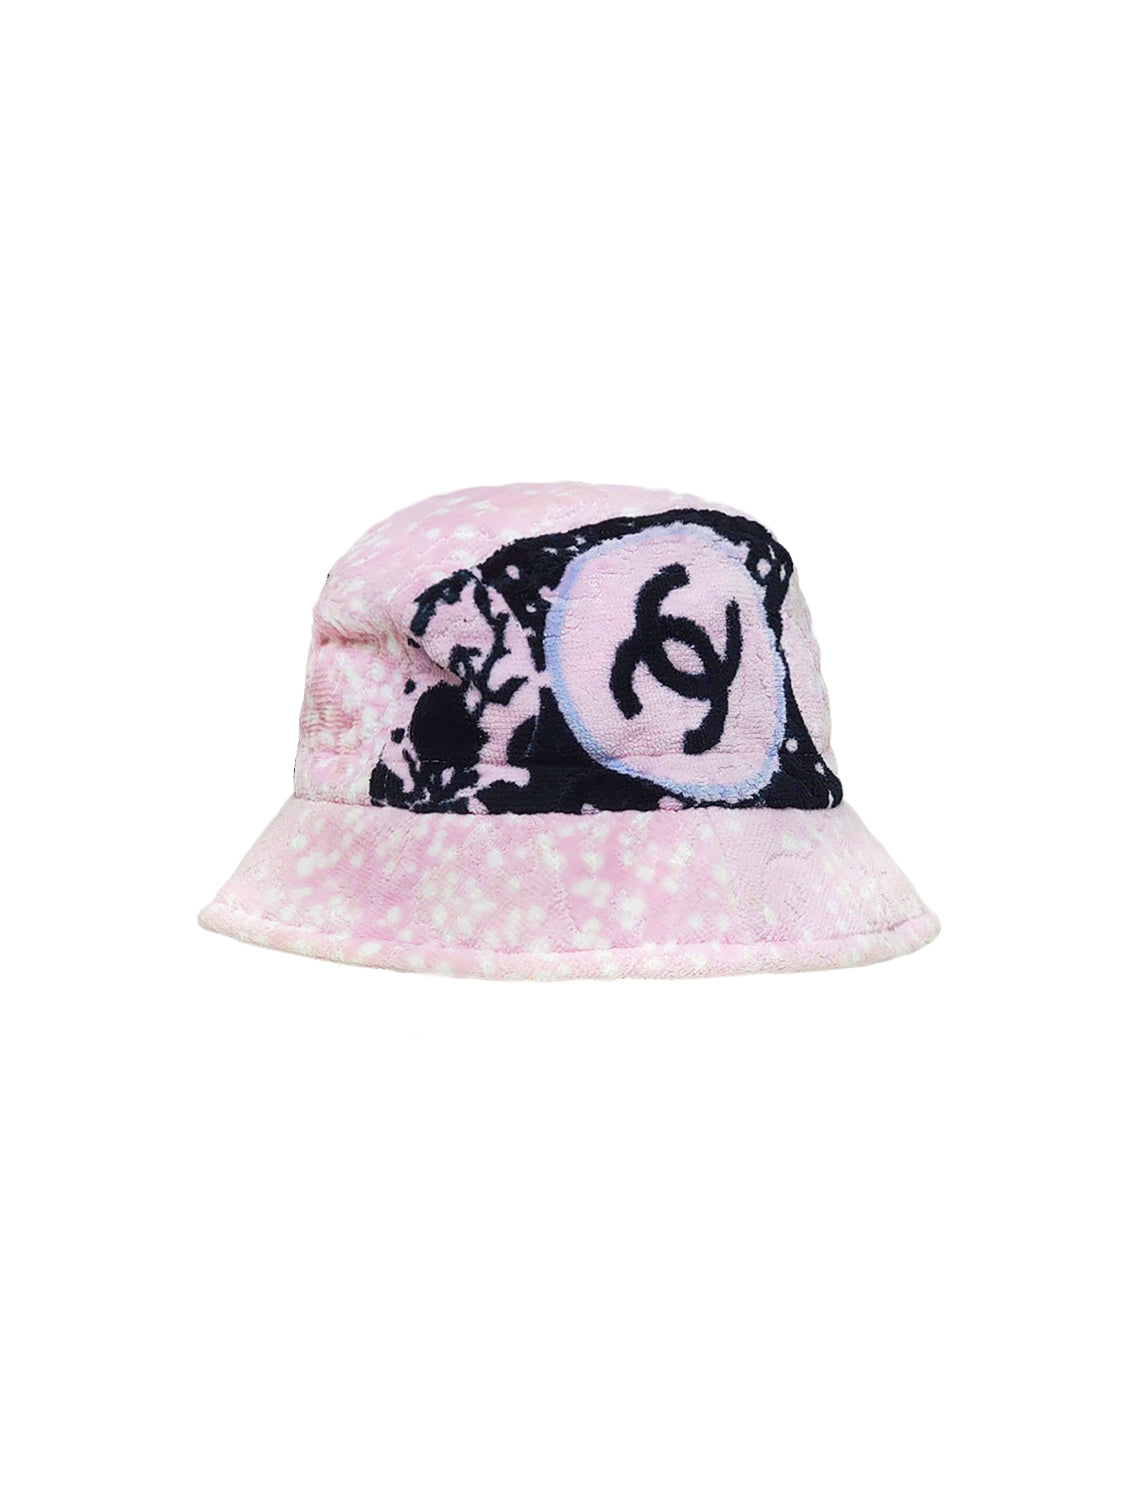 Chanel Terrycloth Rare Pink Bucket Hat